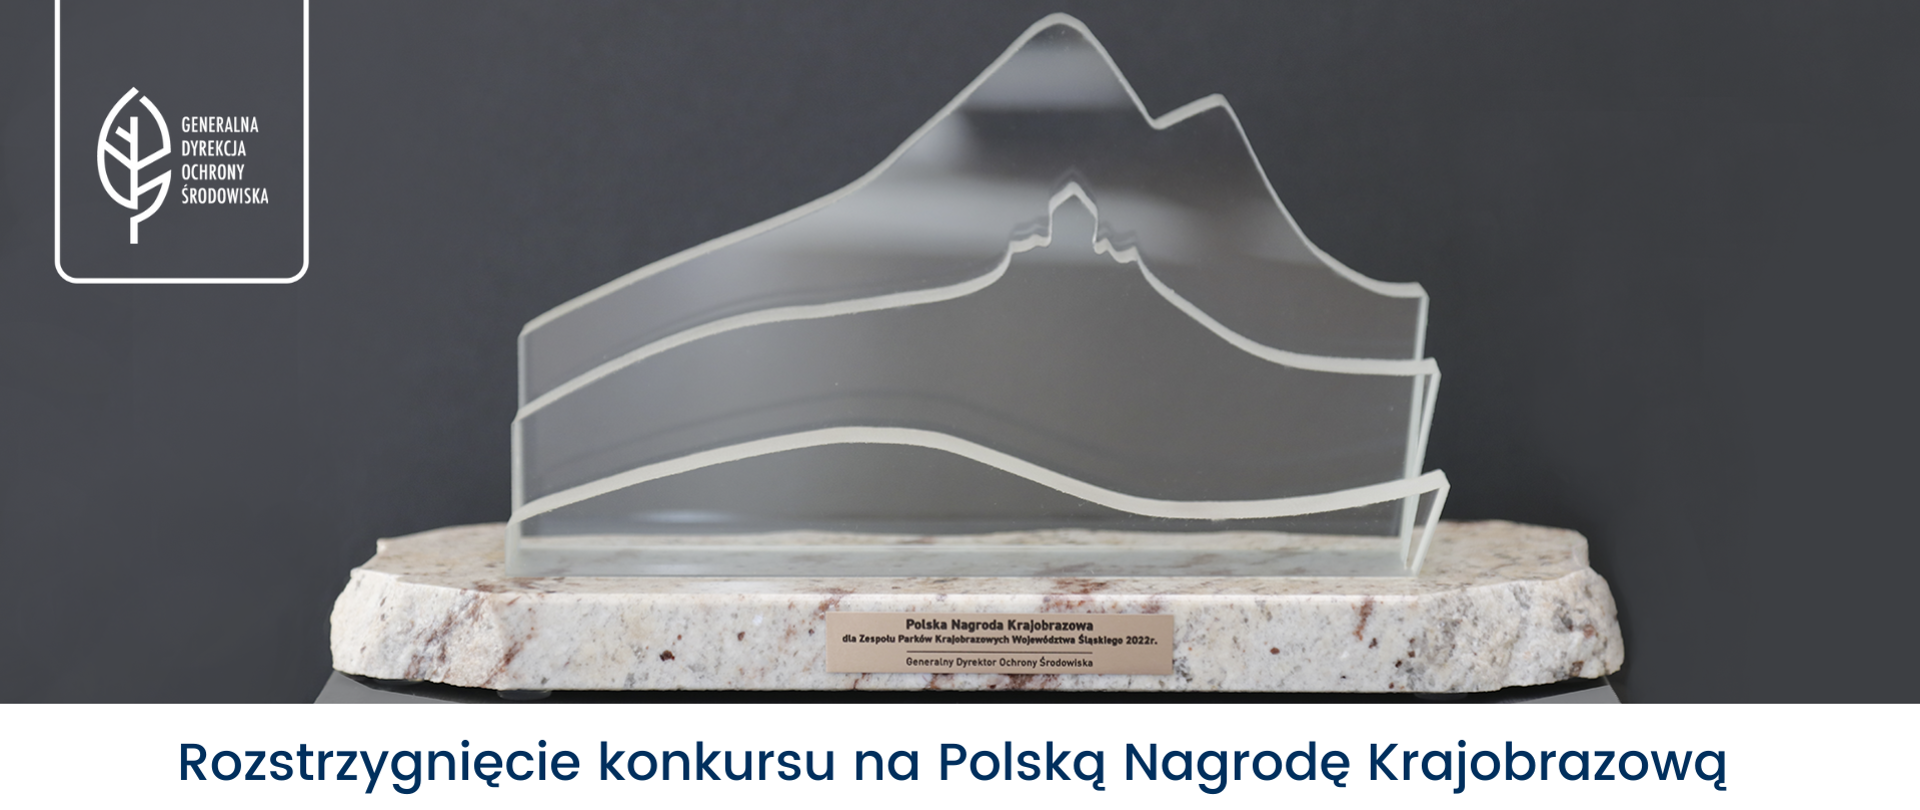 Polska Nagroda Krajobrazowa po raz kolejny trafi na Śląsk